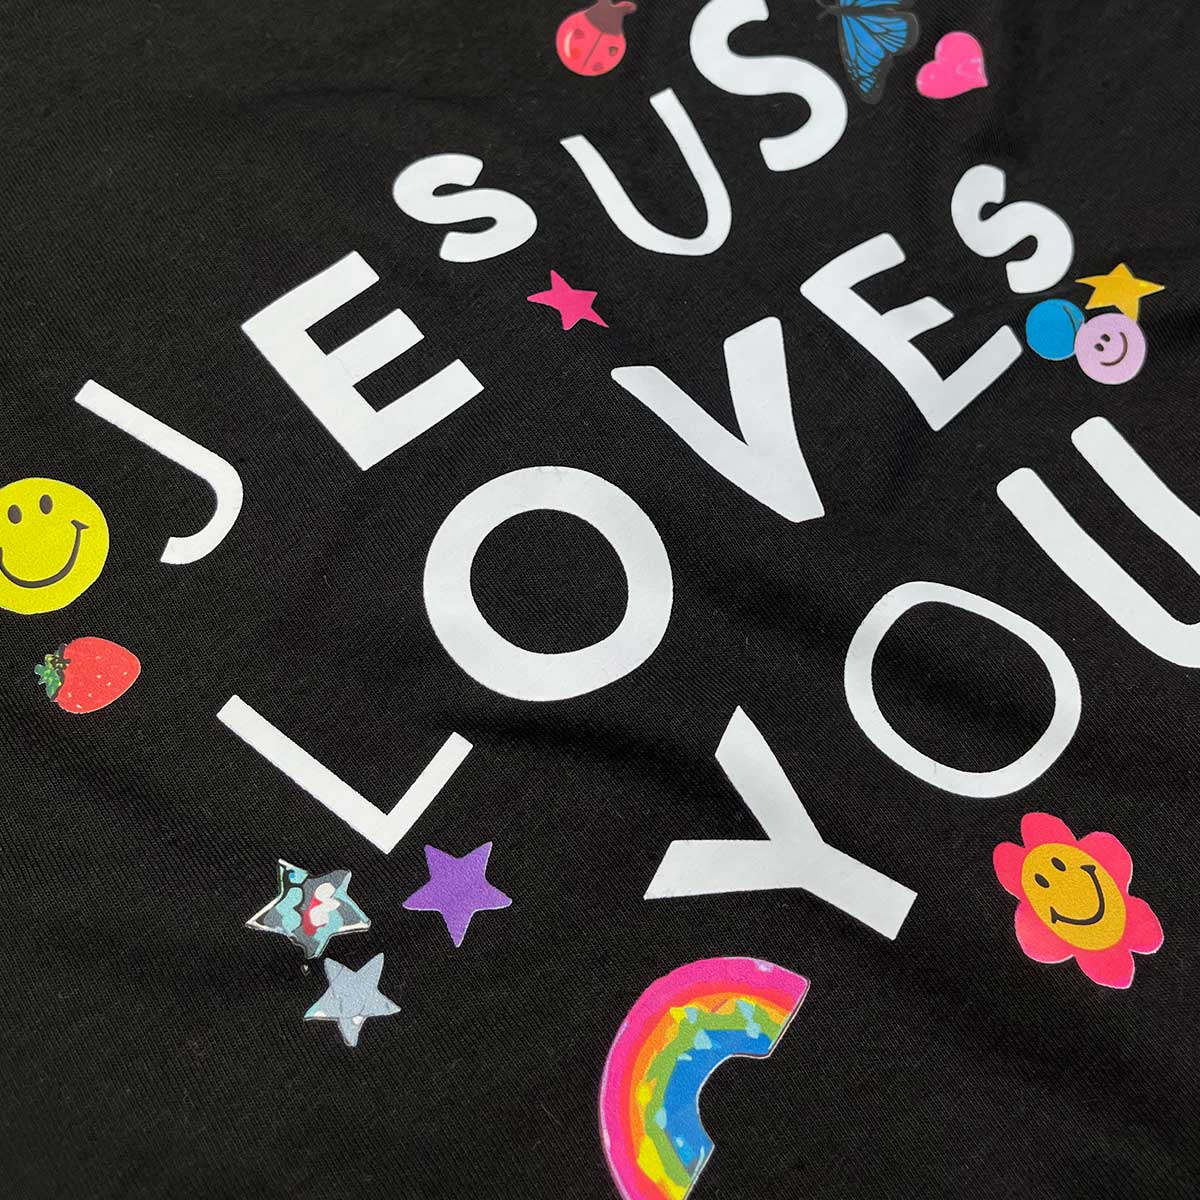 T-Shirt Infantil Preta Jesus Loves You